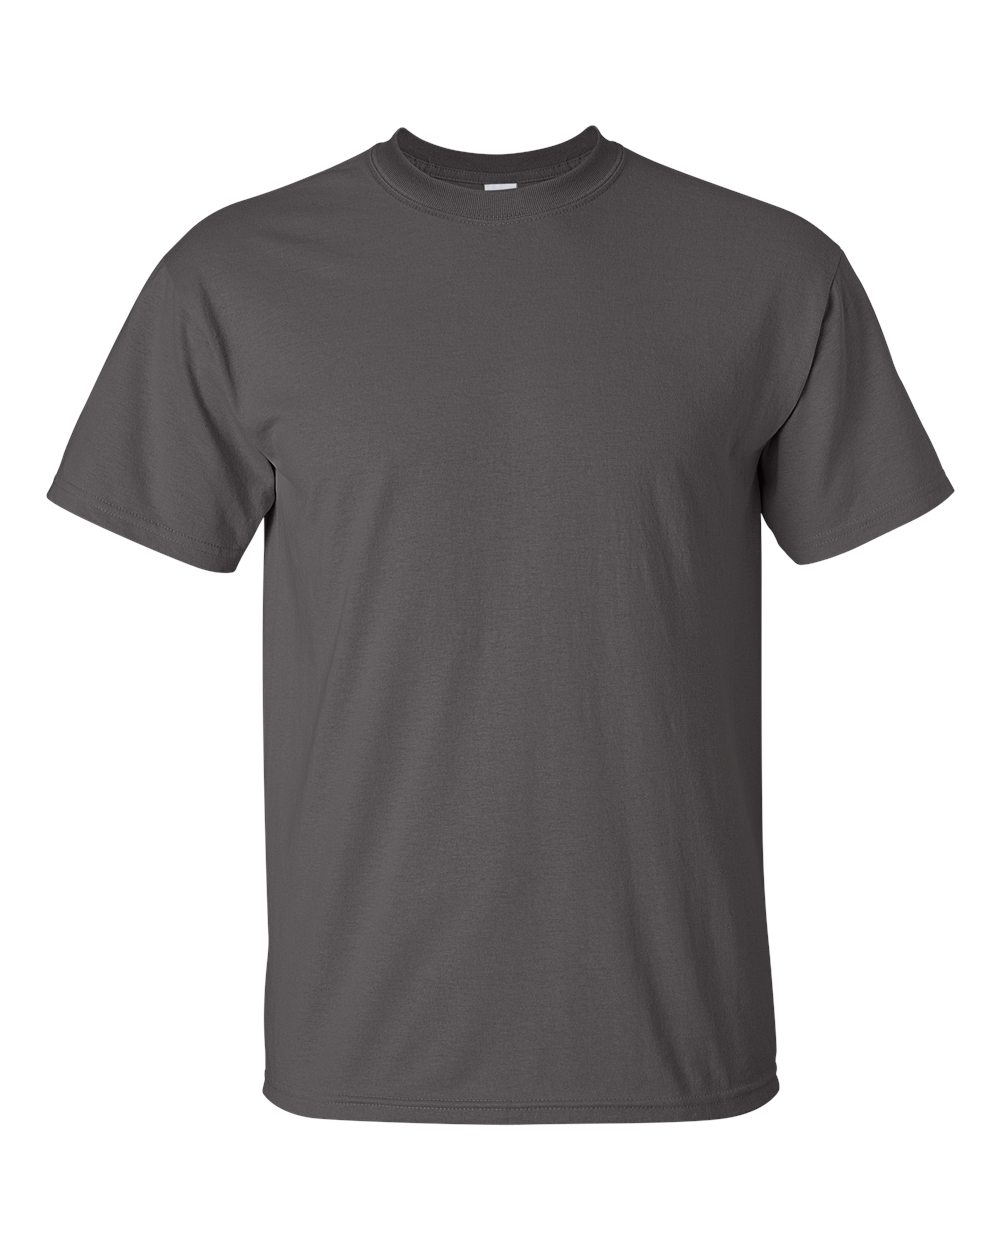 Blank Dark Grey Tshirt Basic tees shop